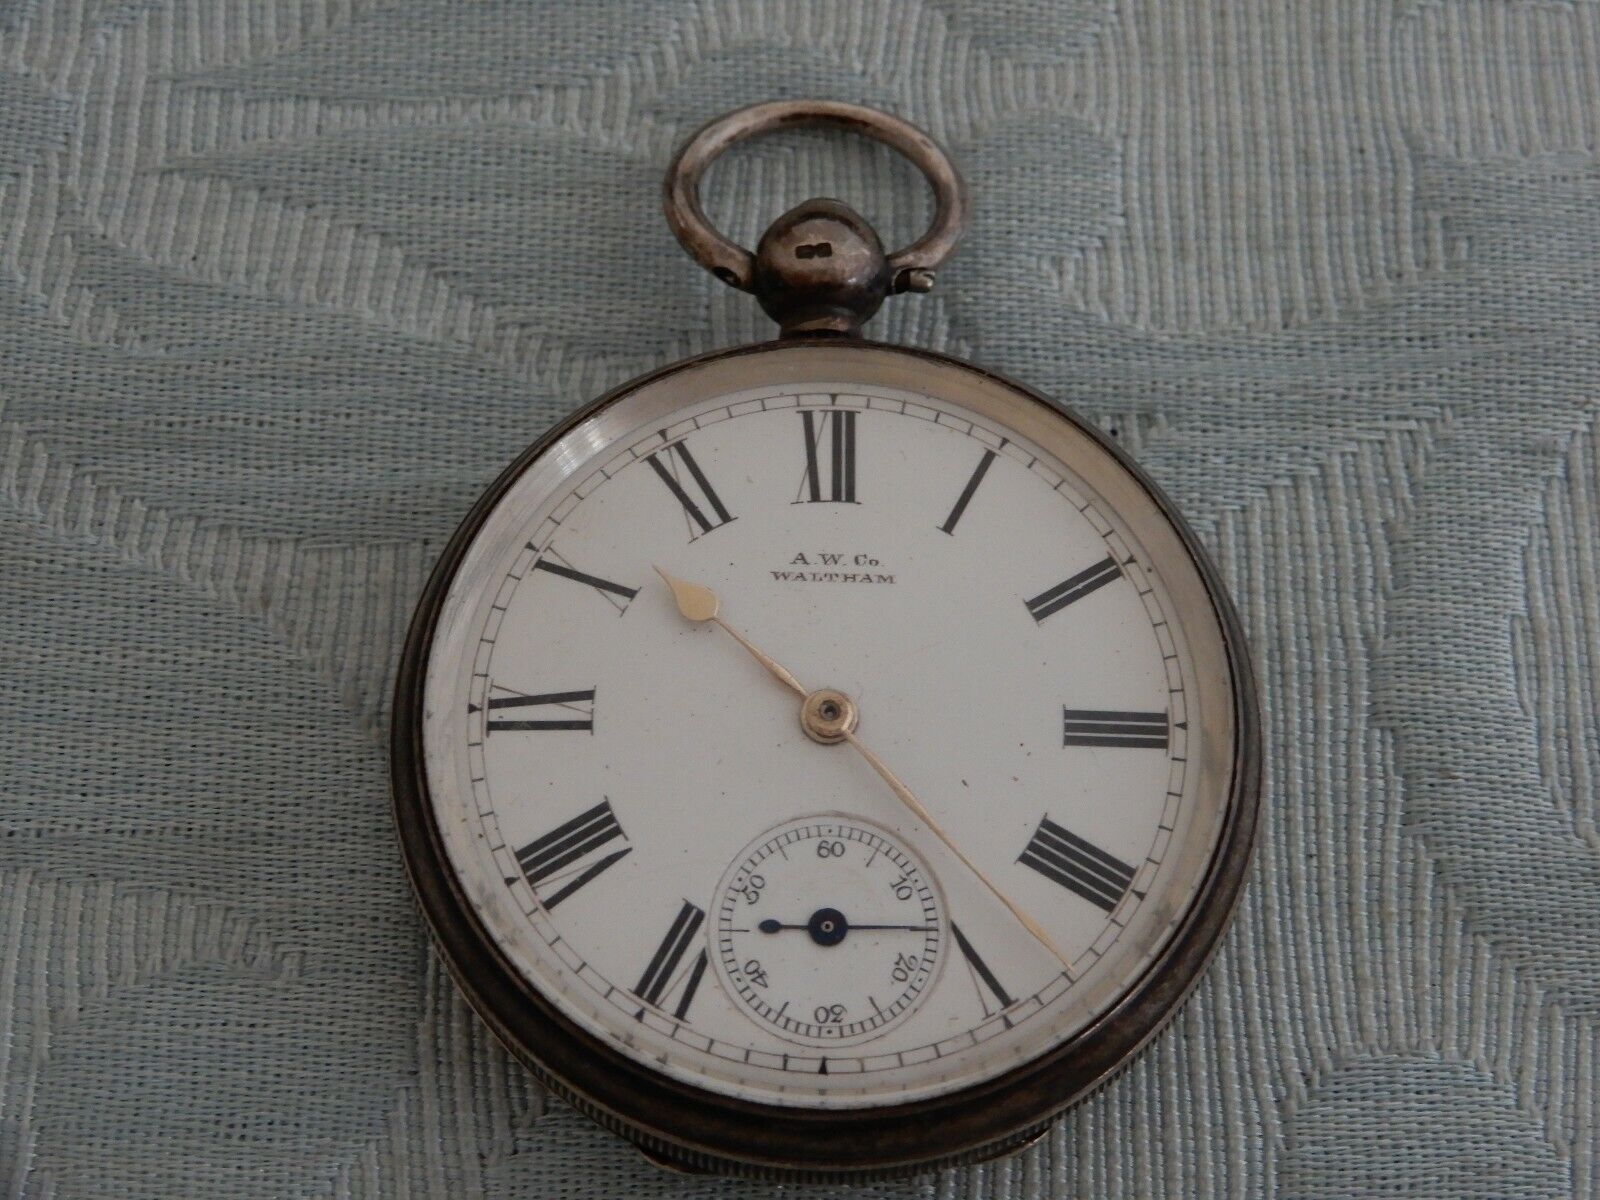 Silver 1886 Waltham "Hillside" high grade key wind pocket watch, not working now